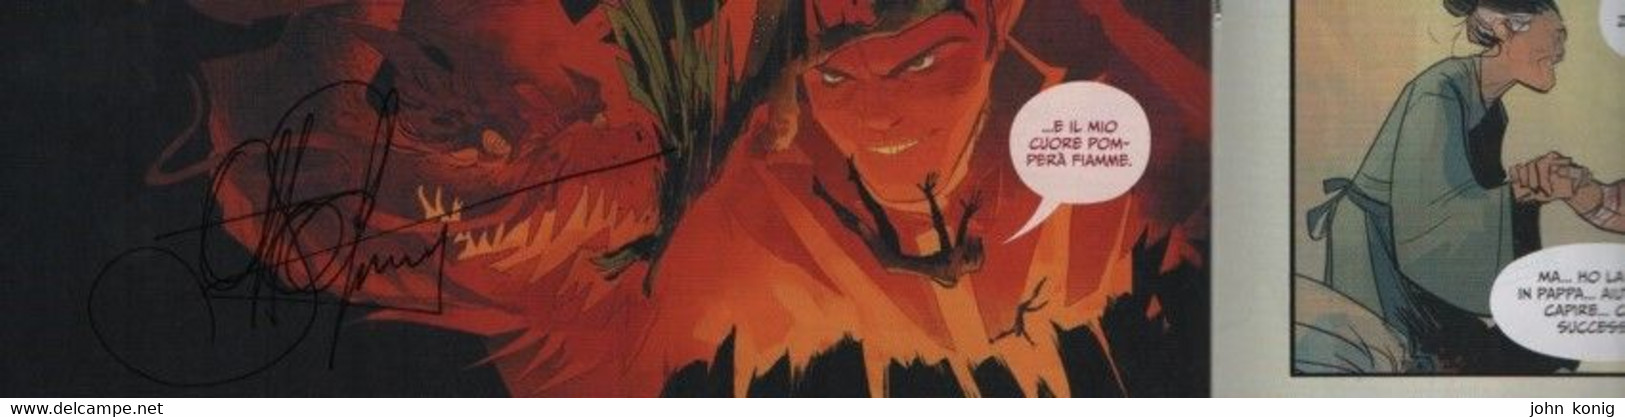 DC COMICS / RW LION - Flash N 3 Ristampa (Universo Rinascita) Firmato Da Otto Schmidt (ad Etna Comics 2017 - Super Heroes